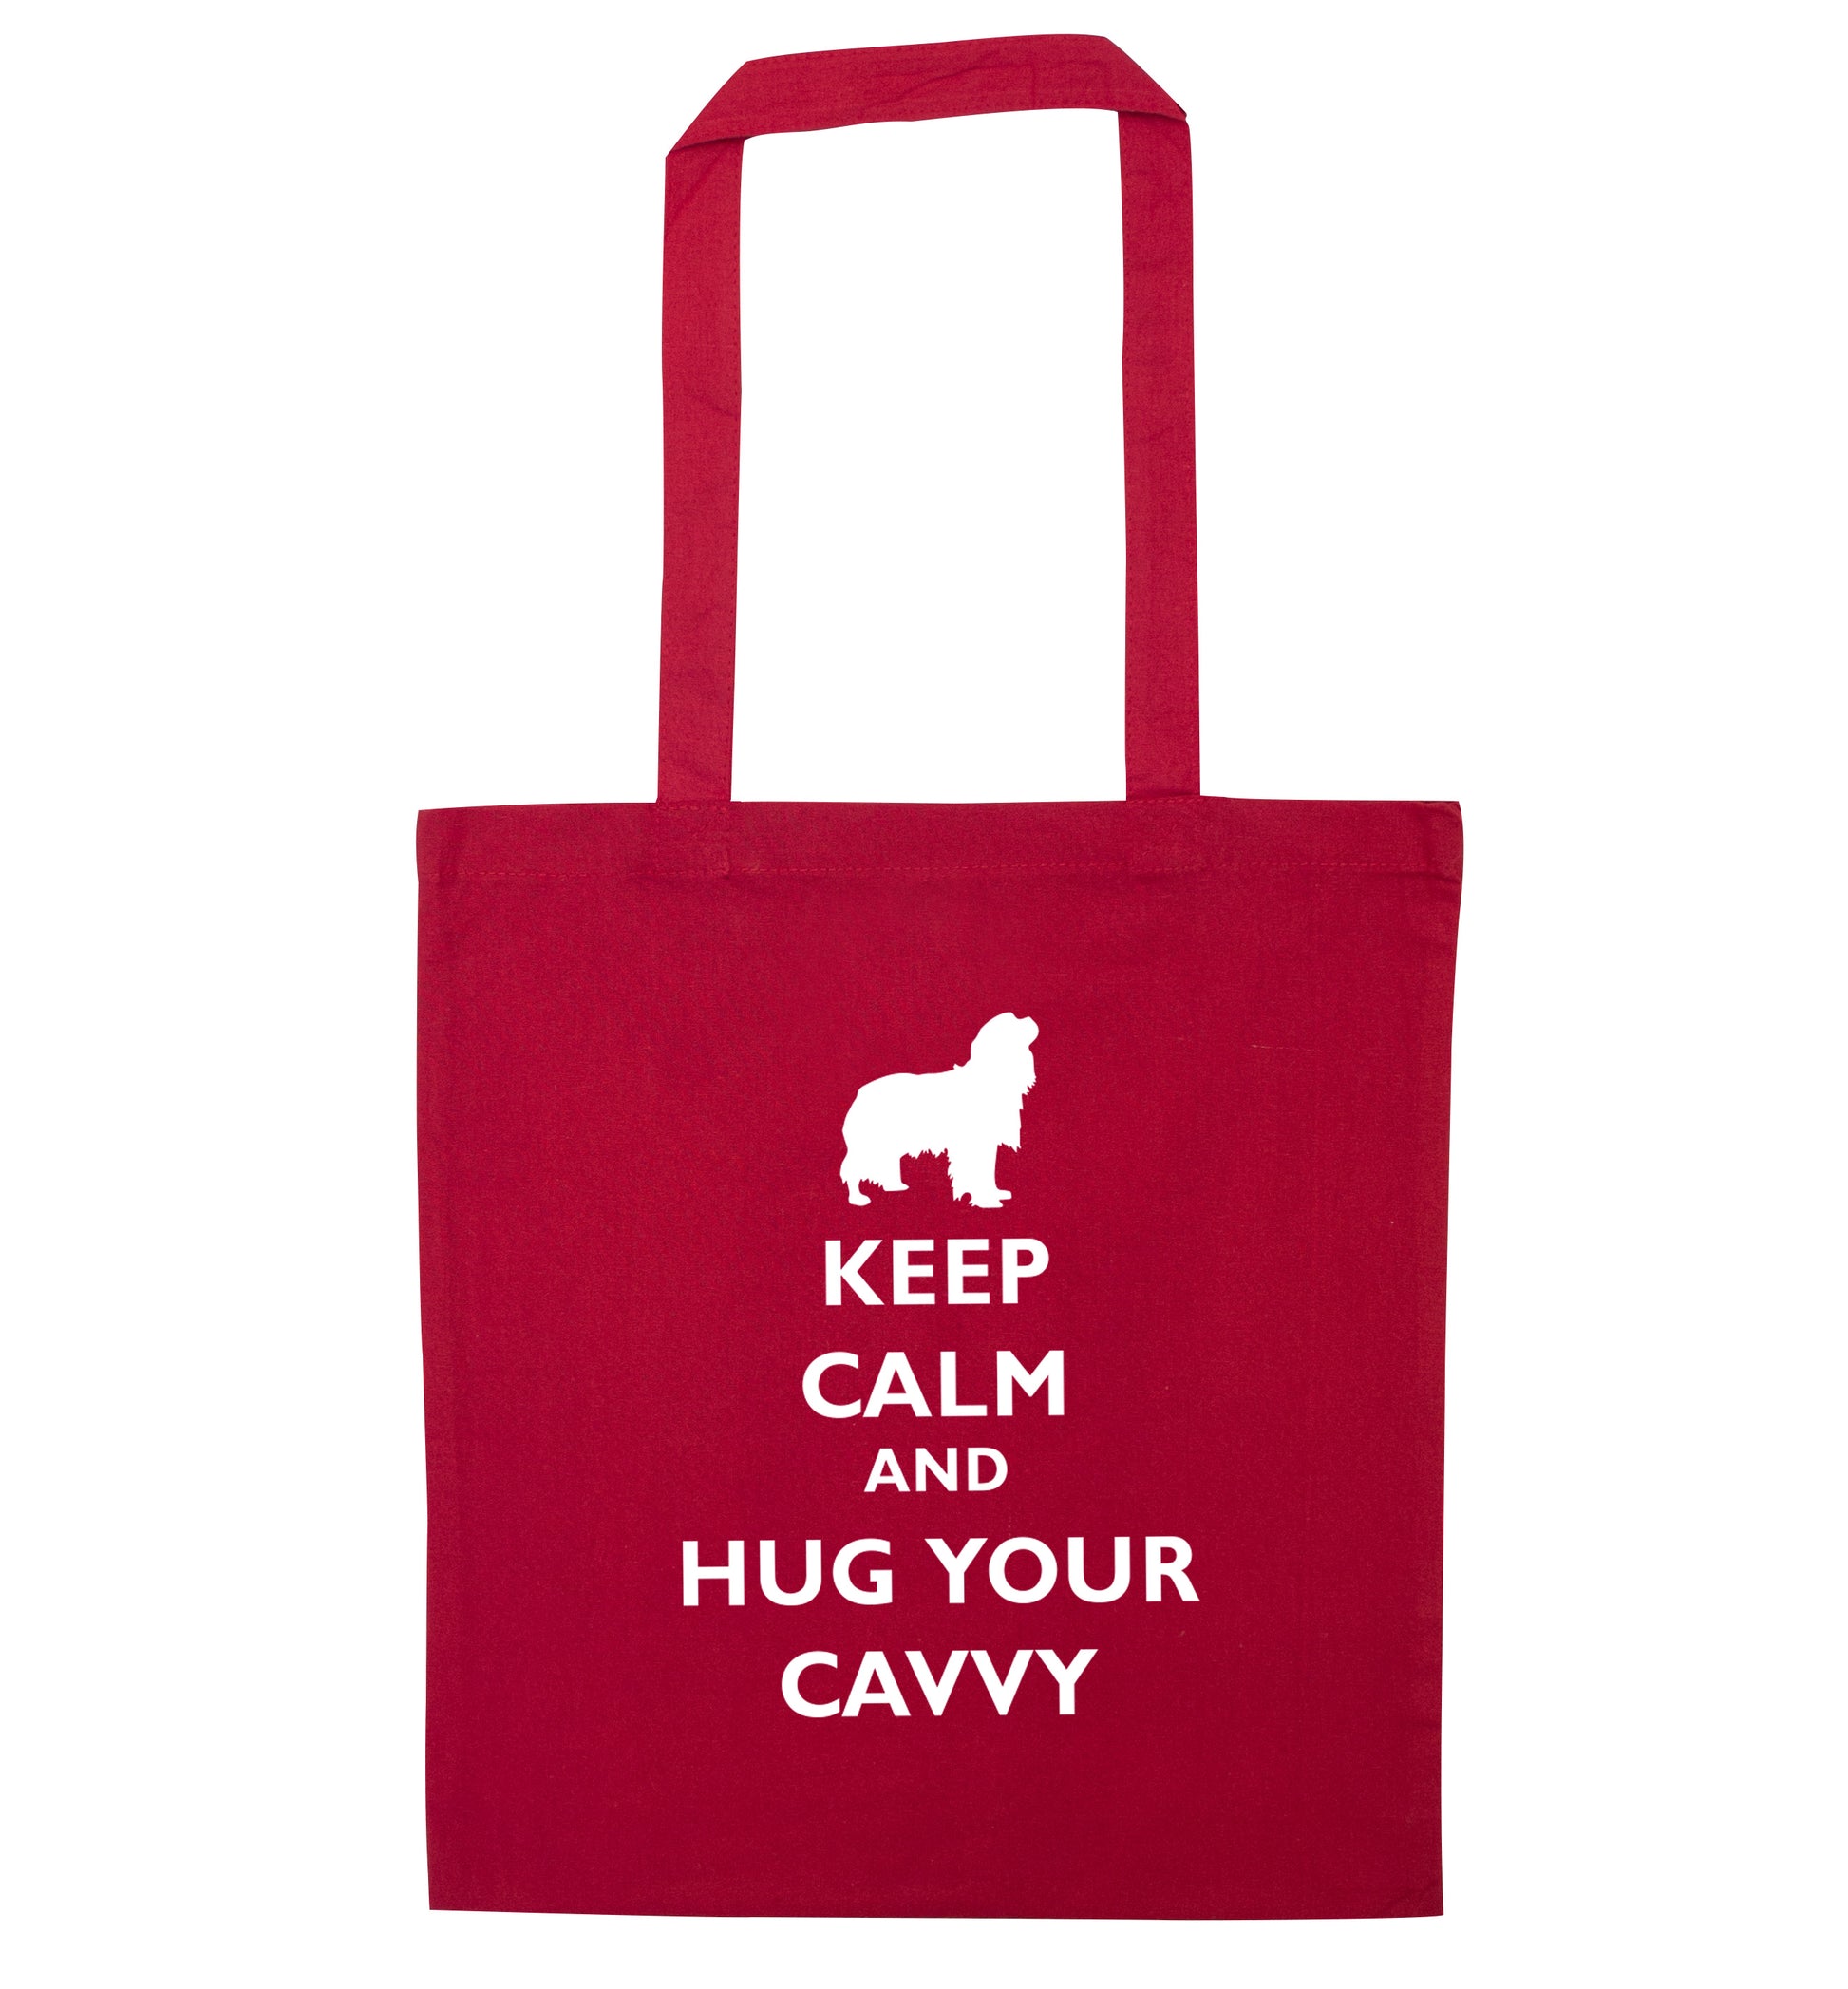 Keep calm and hug your cavvy red tote bag